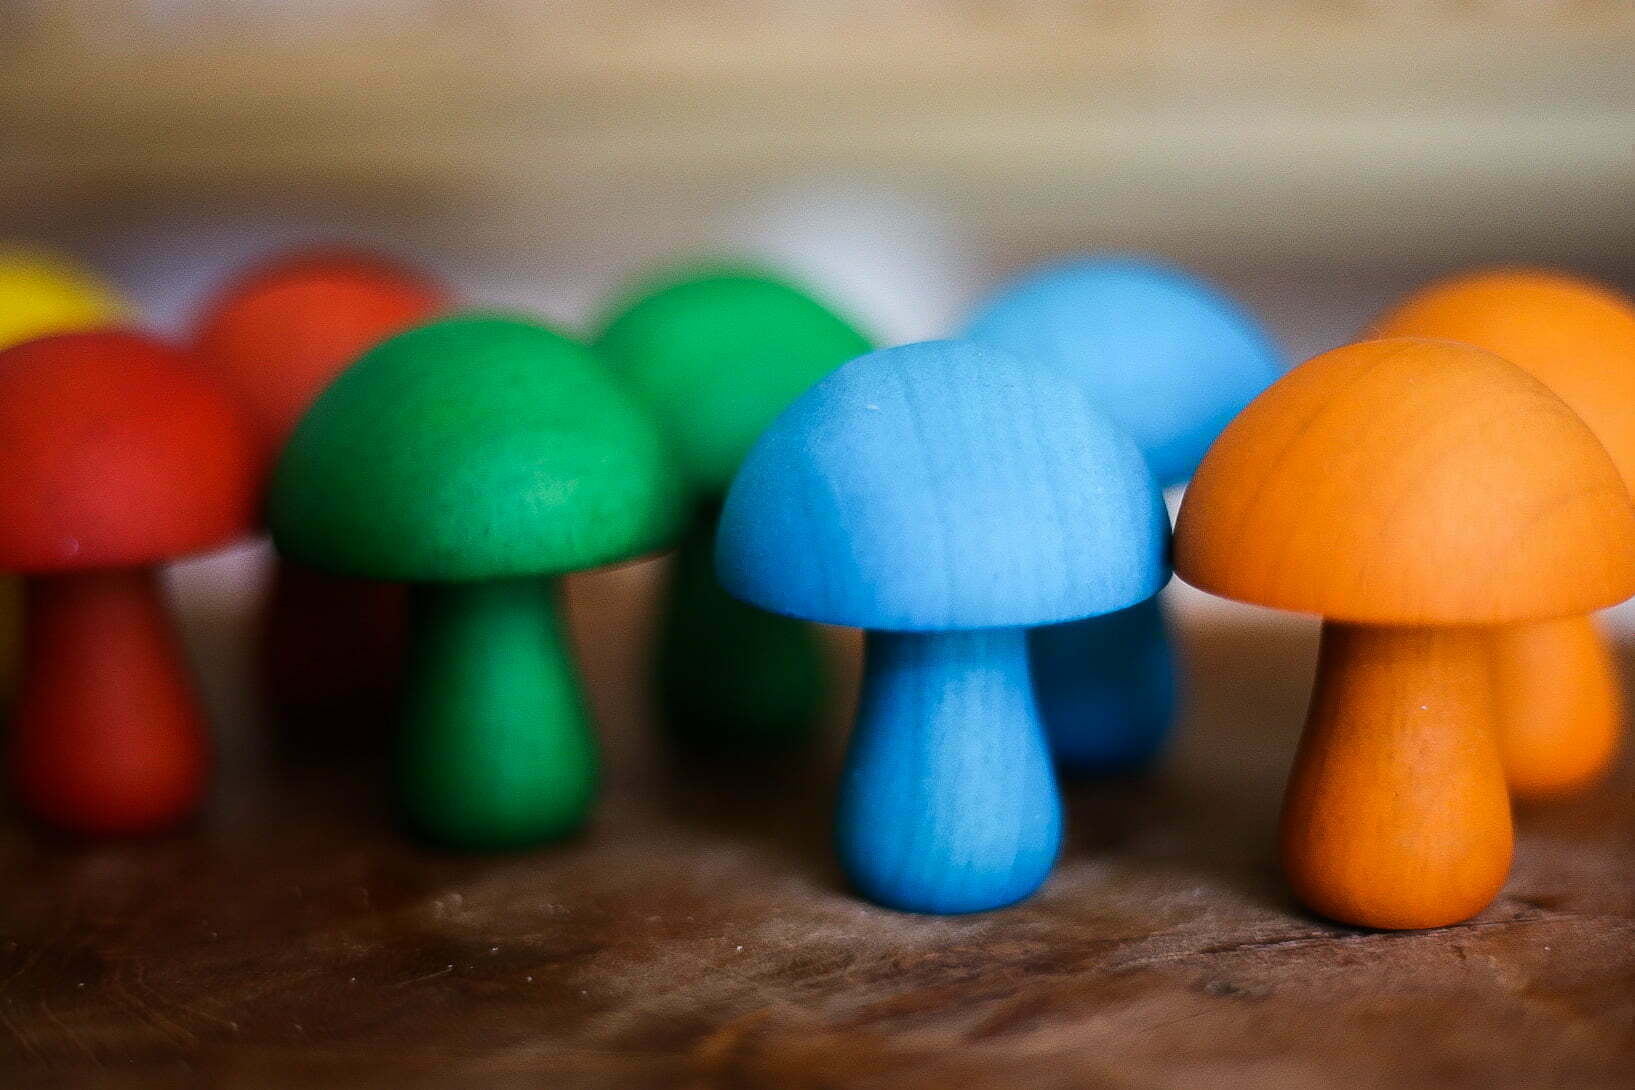 Qtoys Coloured Mini Mushrooms Open Ended Play Set of 10 - Nice Tribe Educational Toys